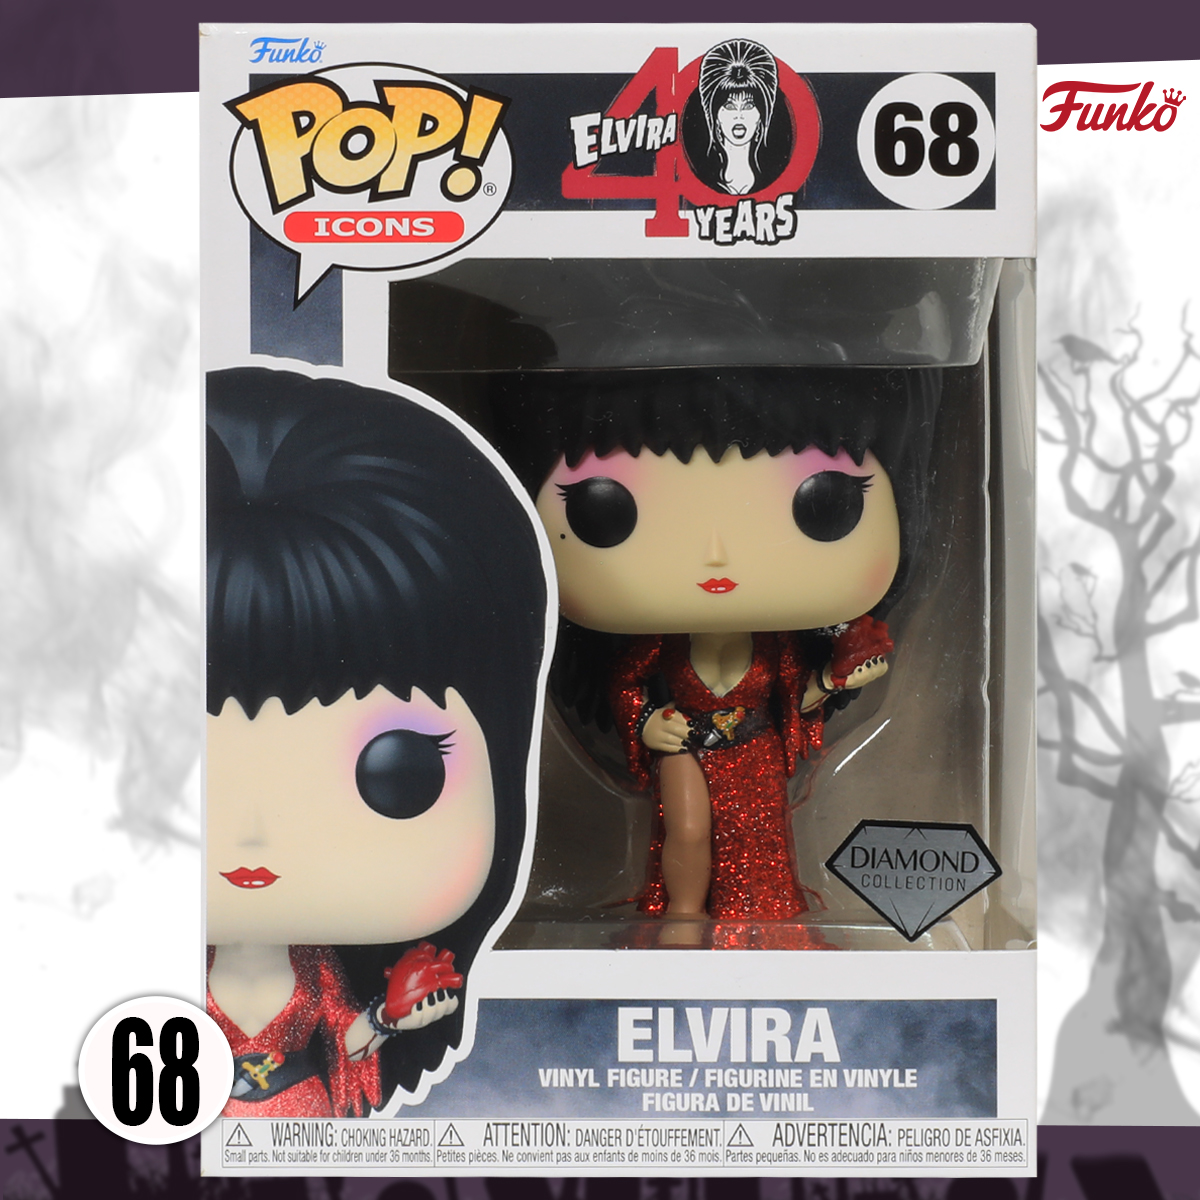 Funko Pop Icons Elvira 40 Years - Elvira Diamond Exclusive # 68